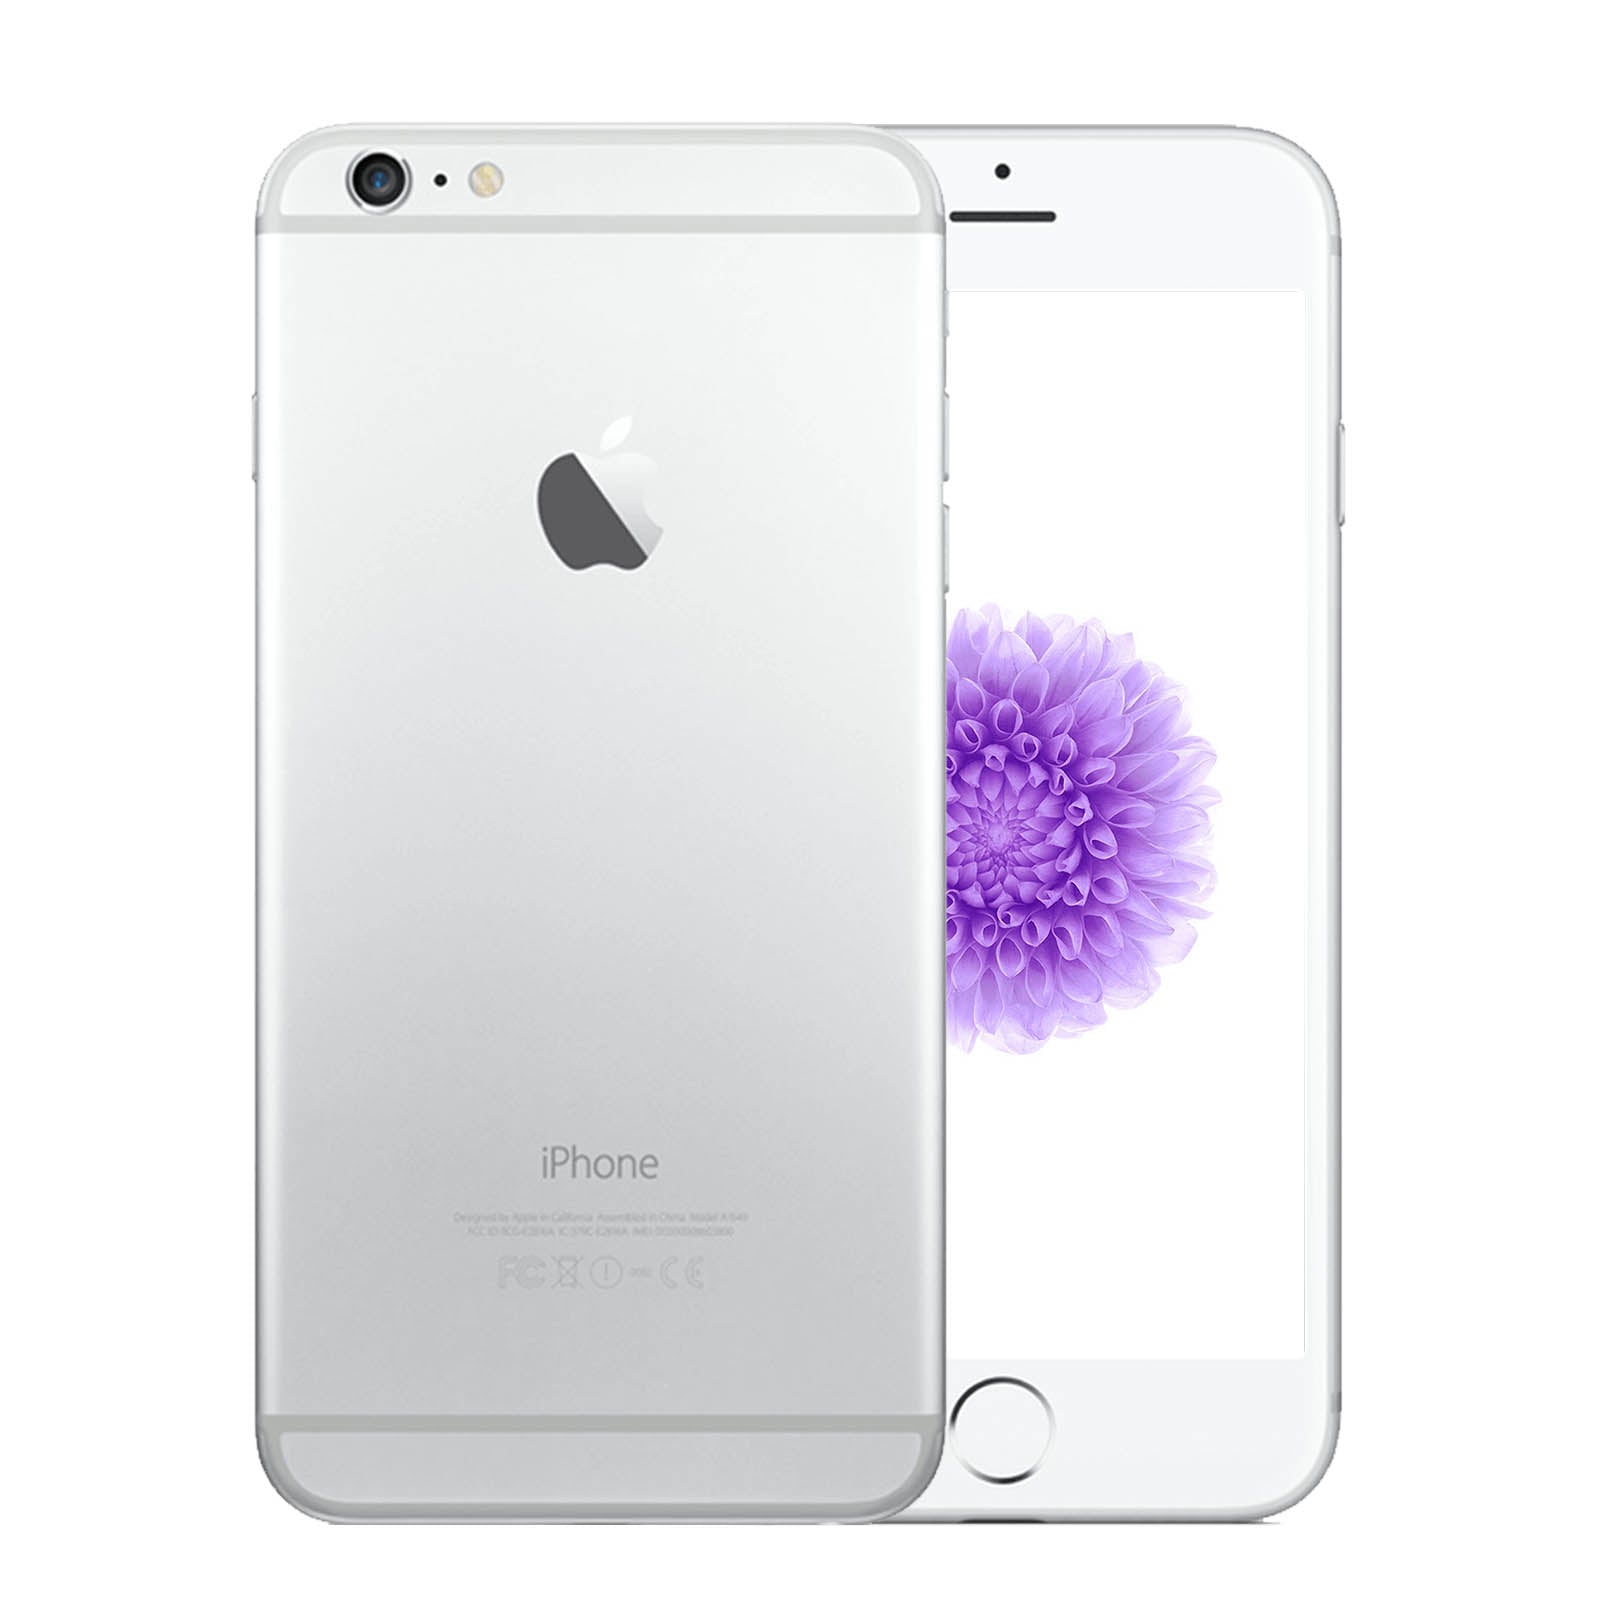 Apple iPhone 6 128GB Silver Good - Unlocked